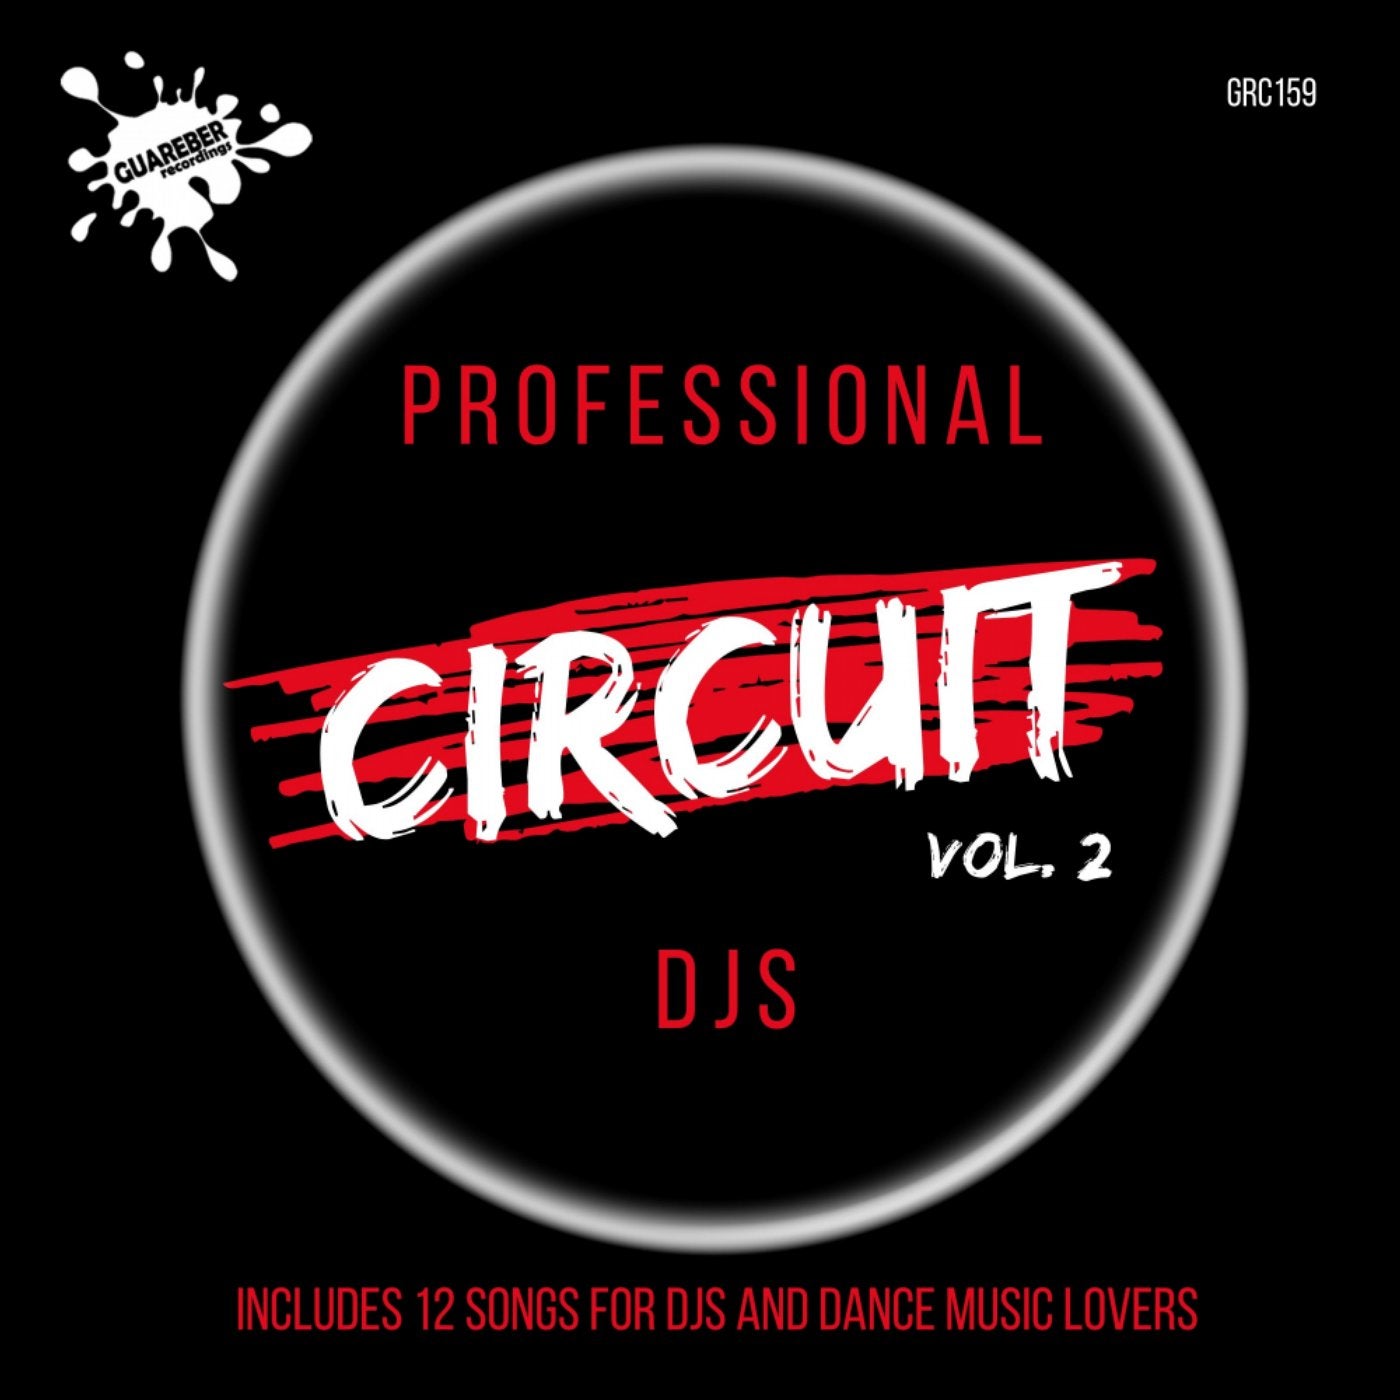 Professional Circuit Djs Compilation, Vol. 2